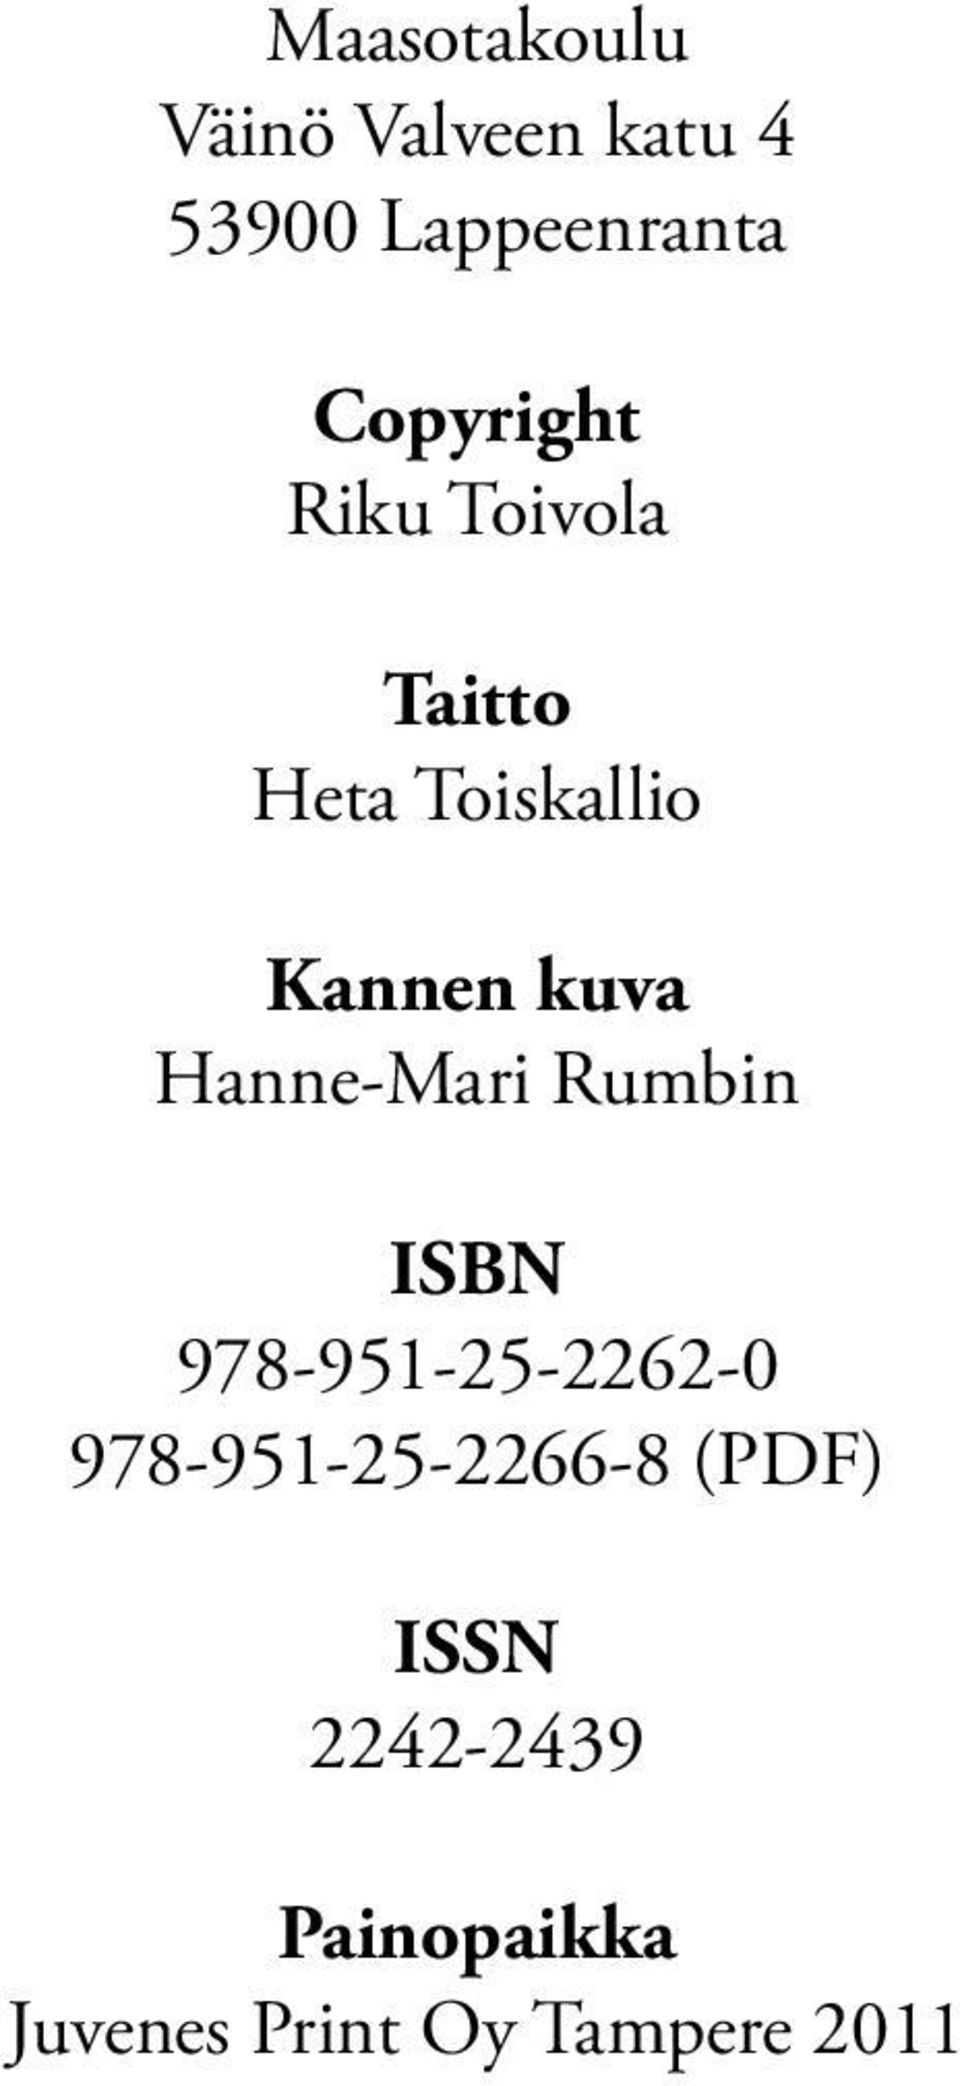 Hanne-Mari Rumbin ISBN 978-951-25-2262-0